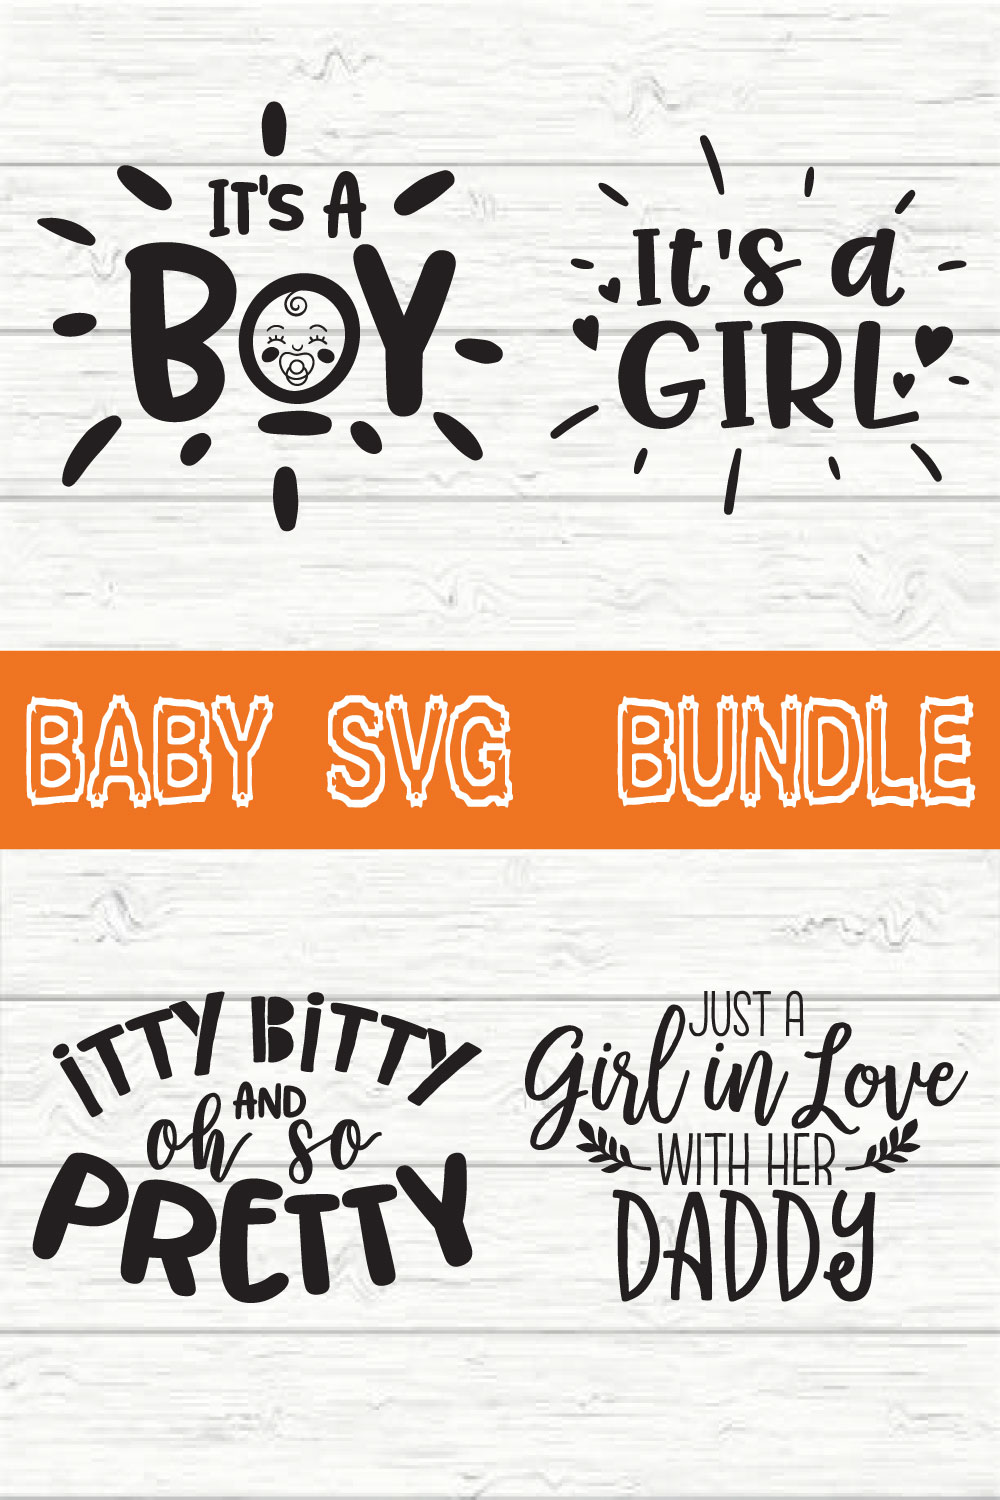 Baby Design Bundle vol 4 pinterest preview image.